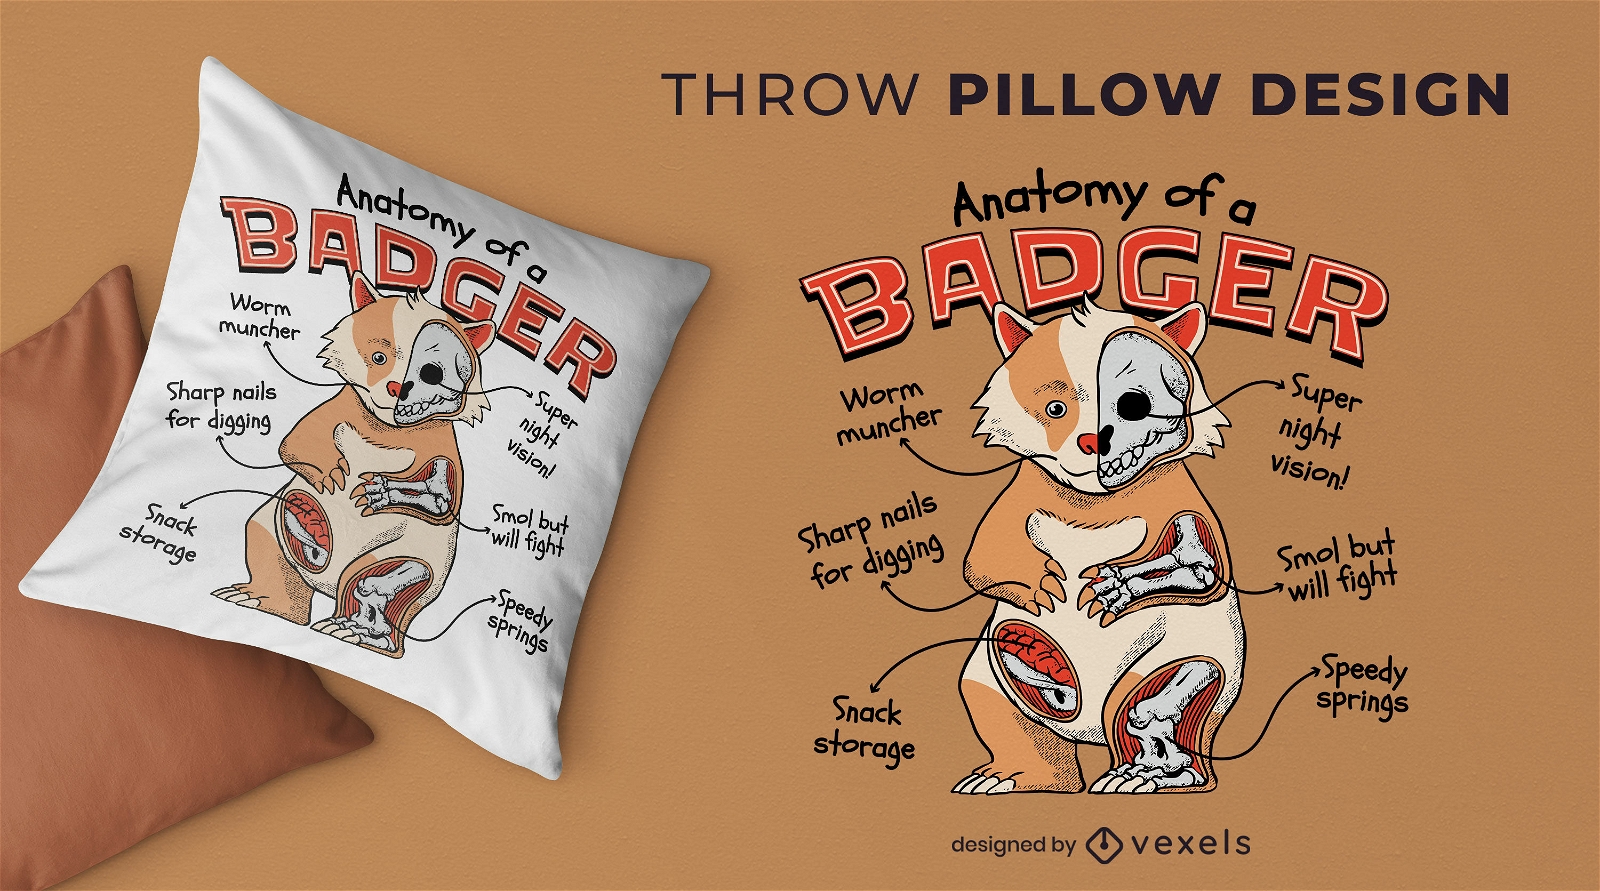 Anatomy of a badger throw pillow design